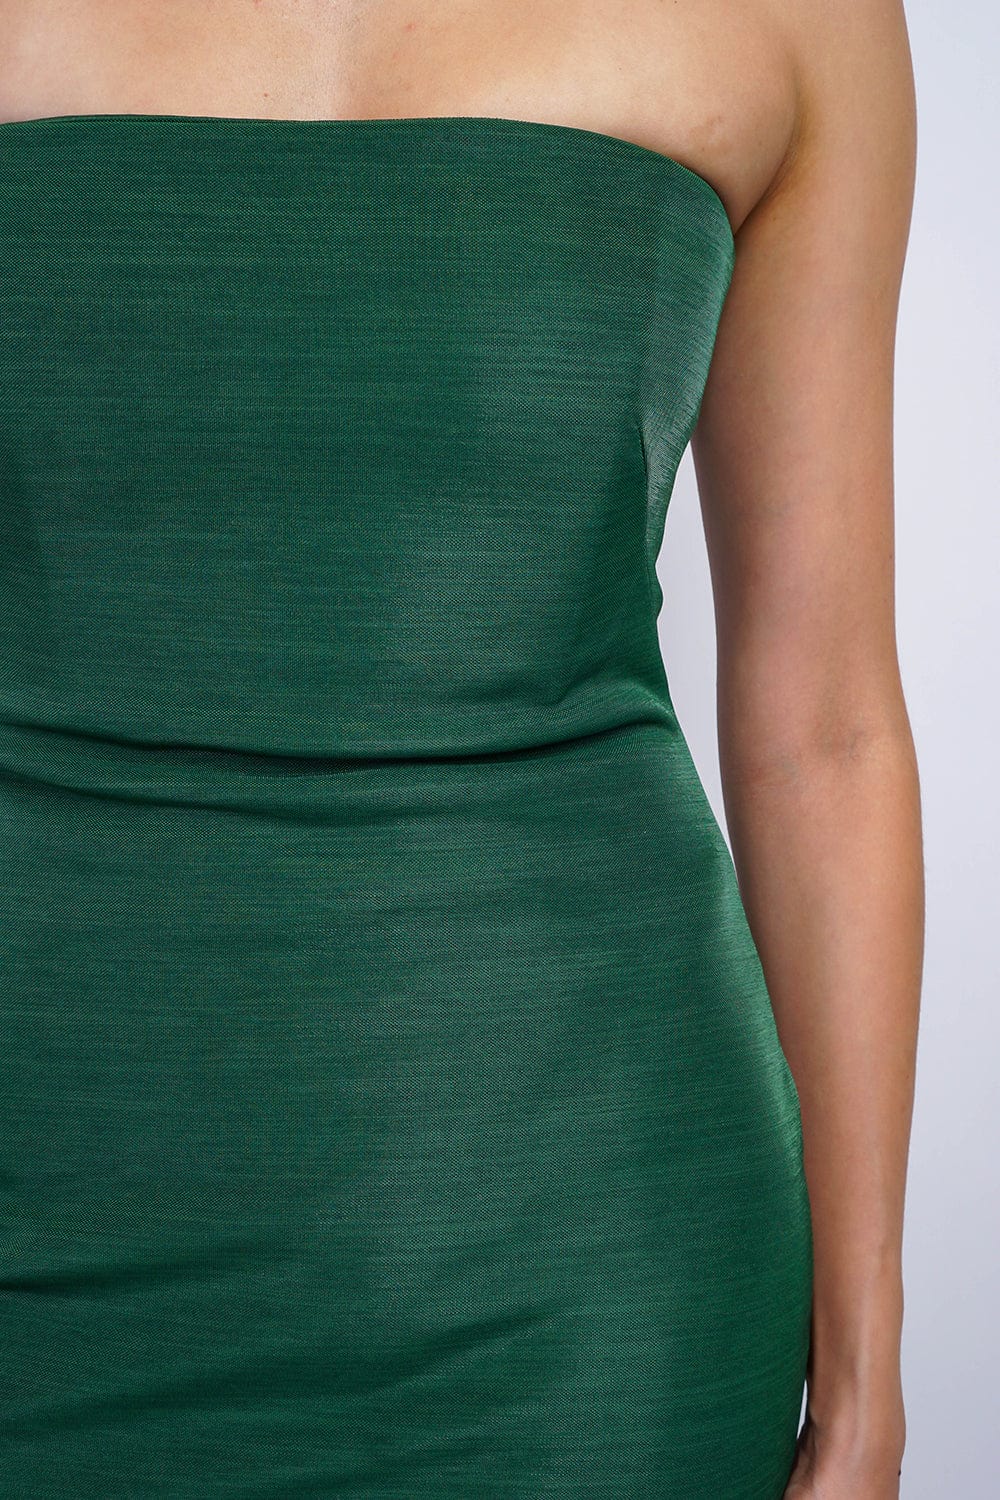 GOWNS Emerald Green Luxe Sheen Strapless Gown - Chloe Dao